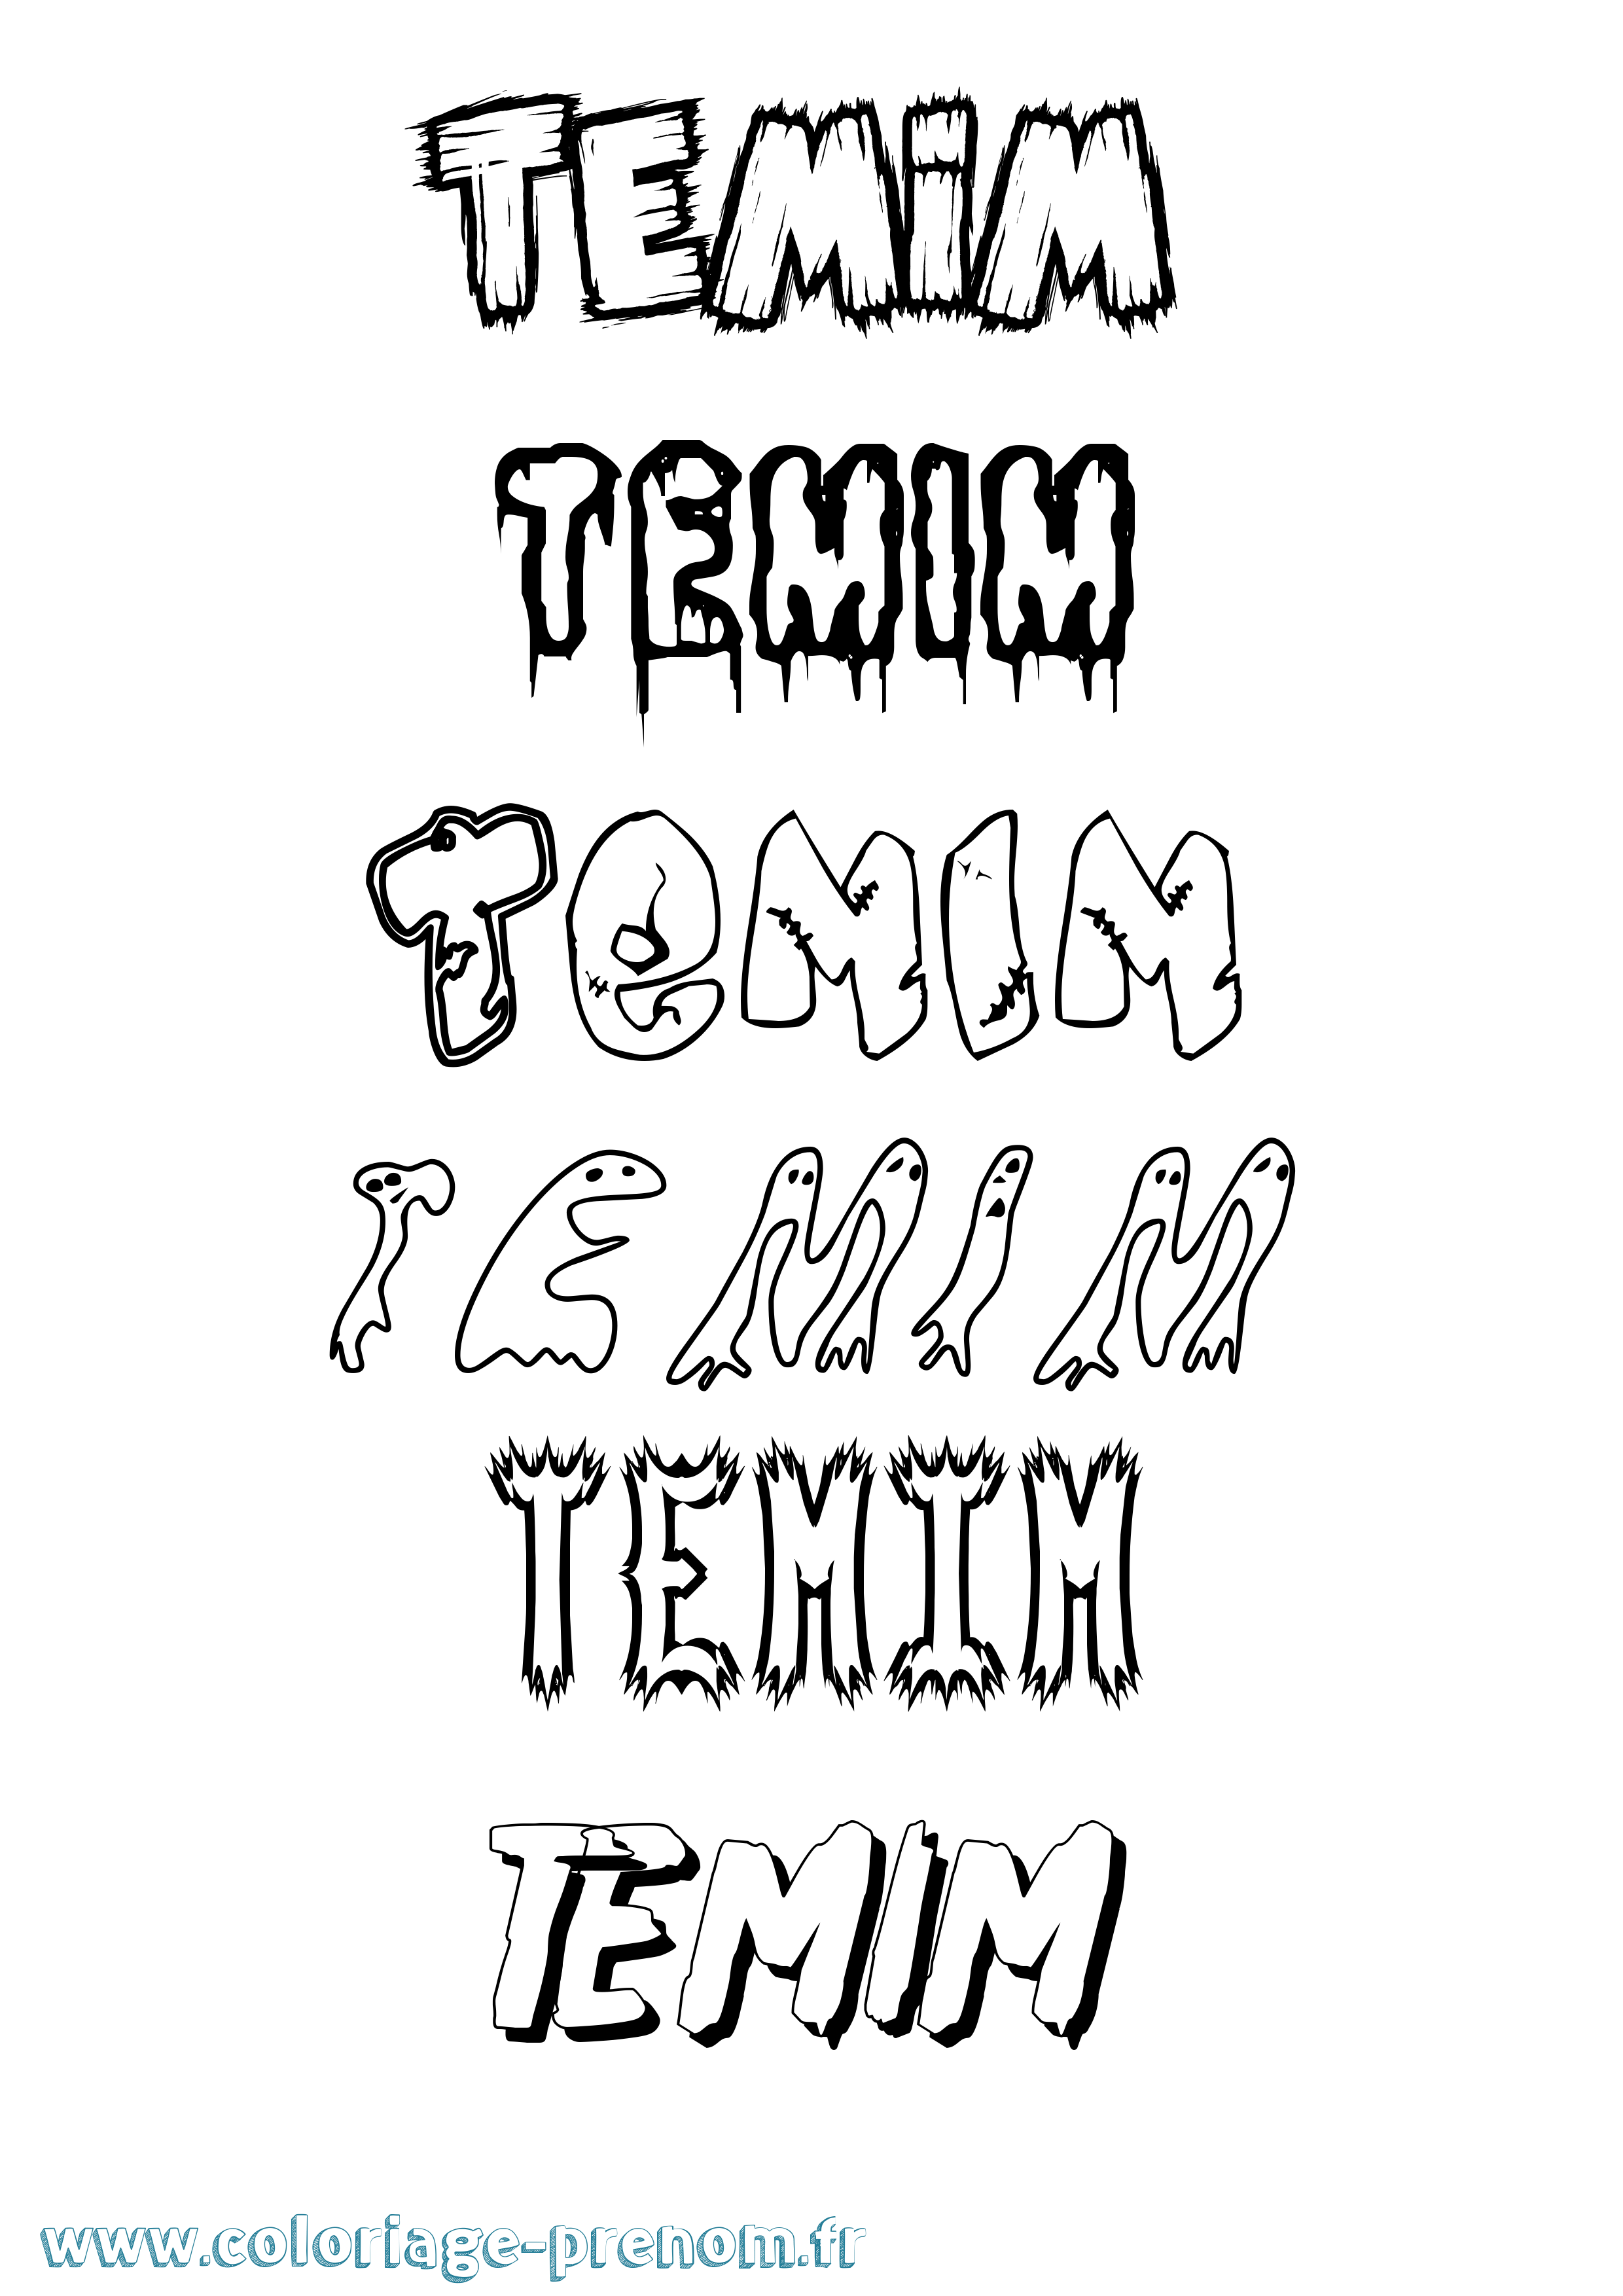 Coloriage prénom Temim Frisson